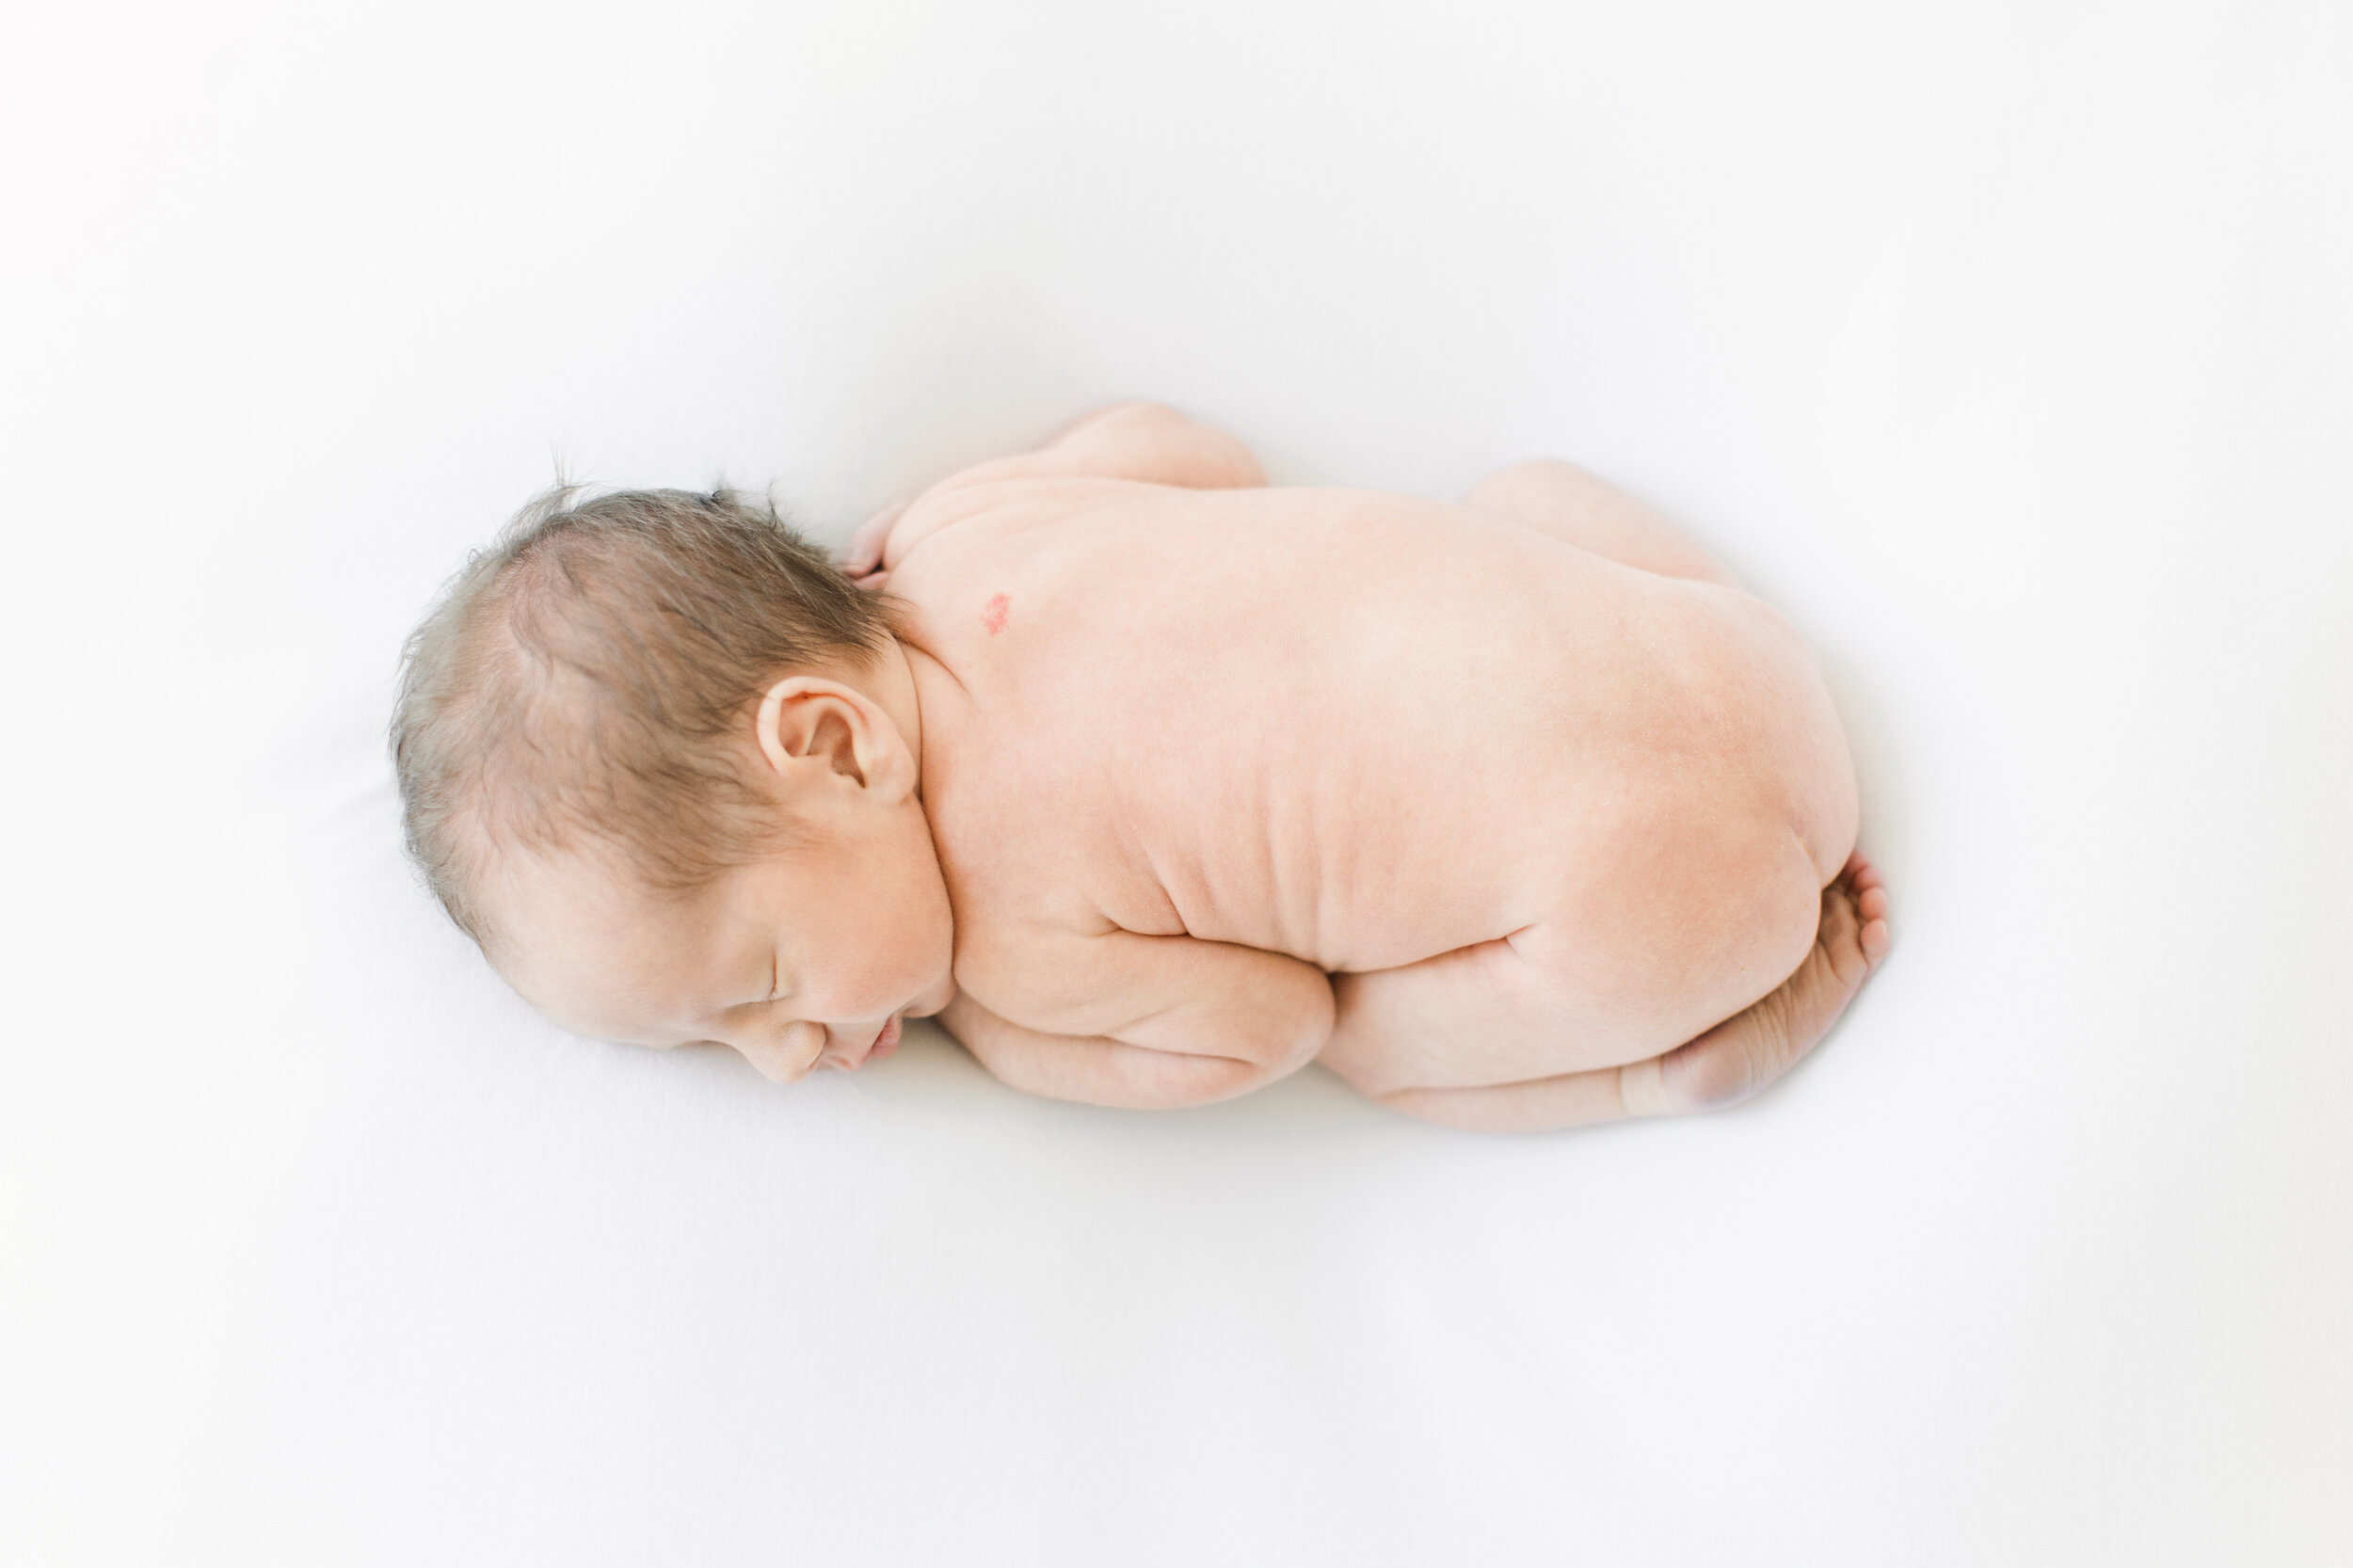 unique newborn photography of baby alone